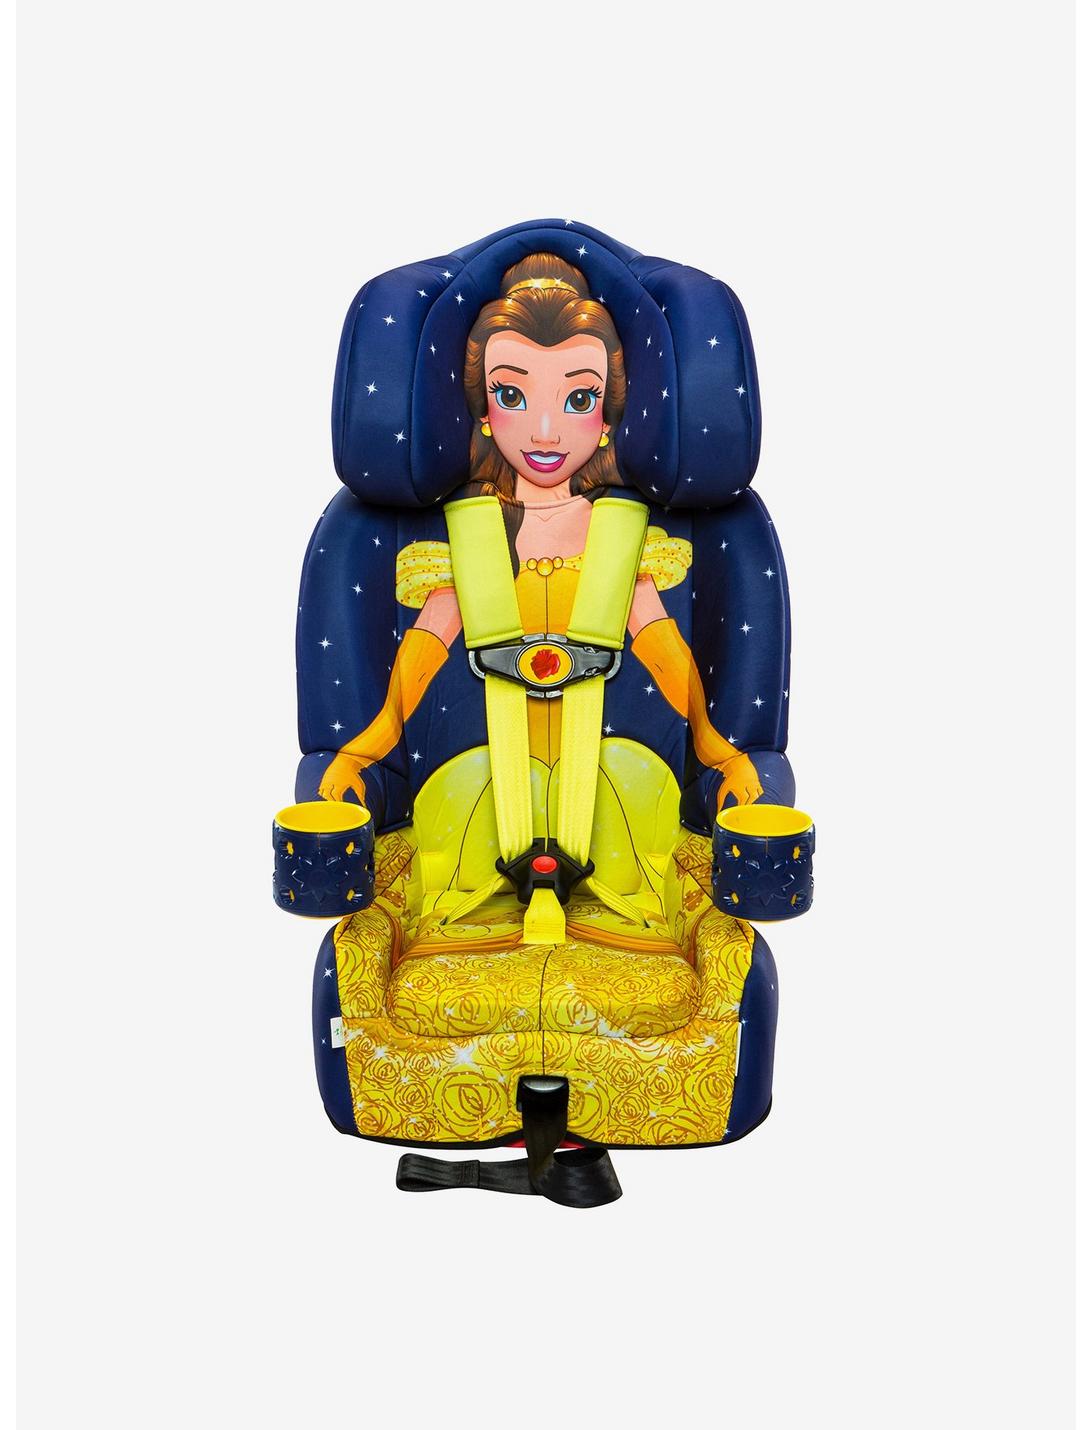 KidsEmbrace Disney Belle Combination Harness Booster Car Seat, , hi-res